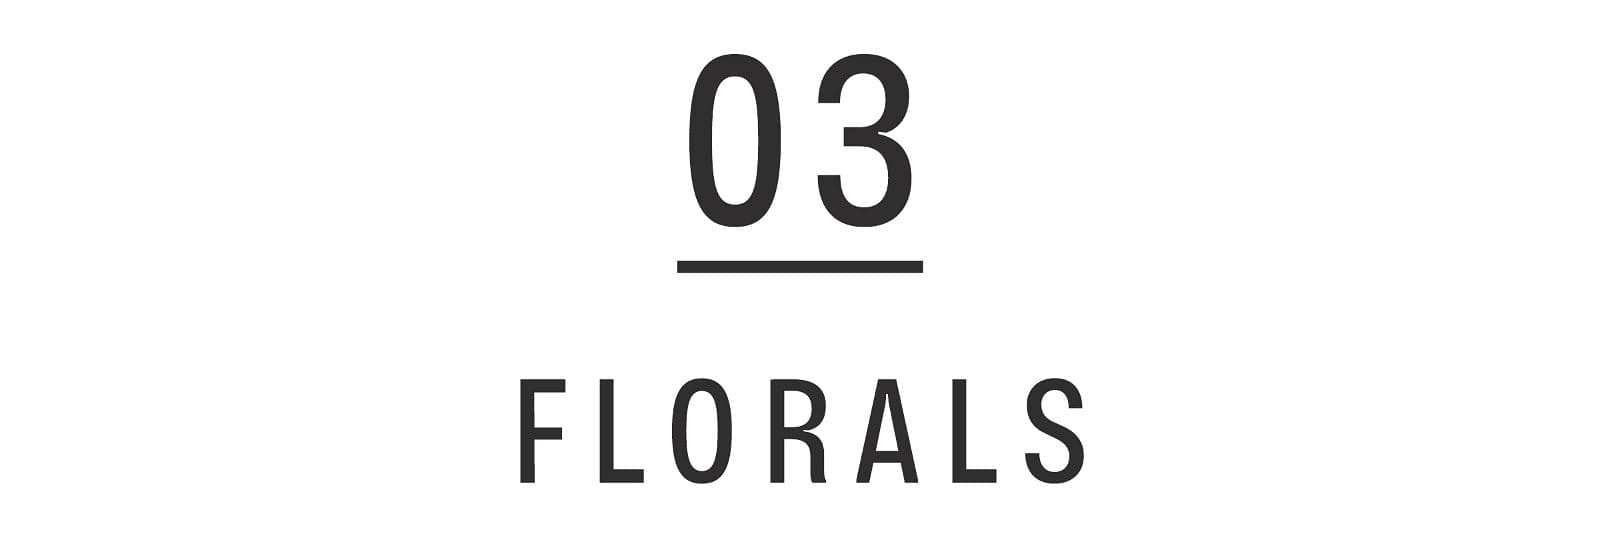 03 FLORALS